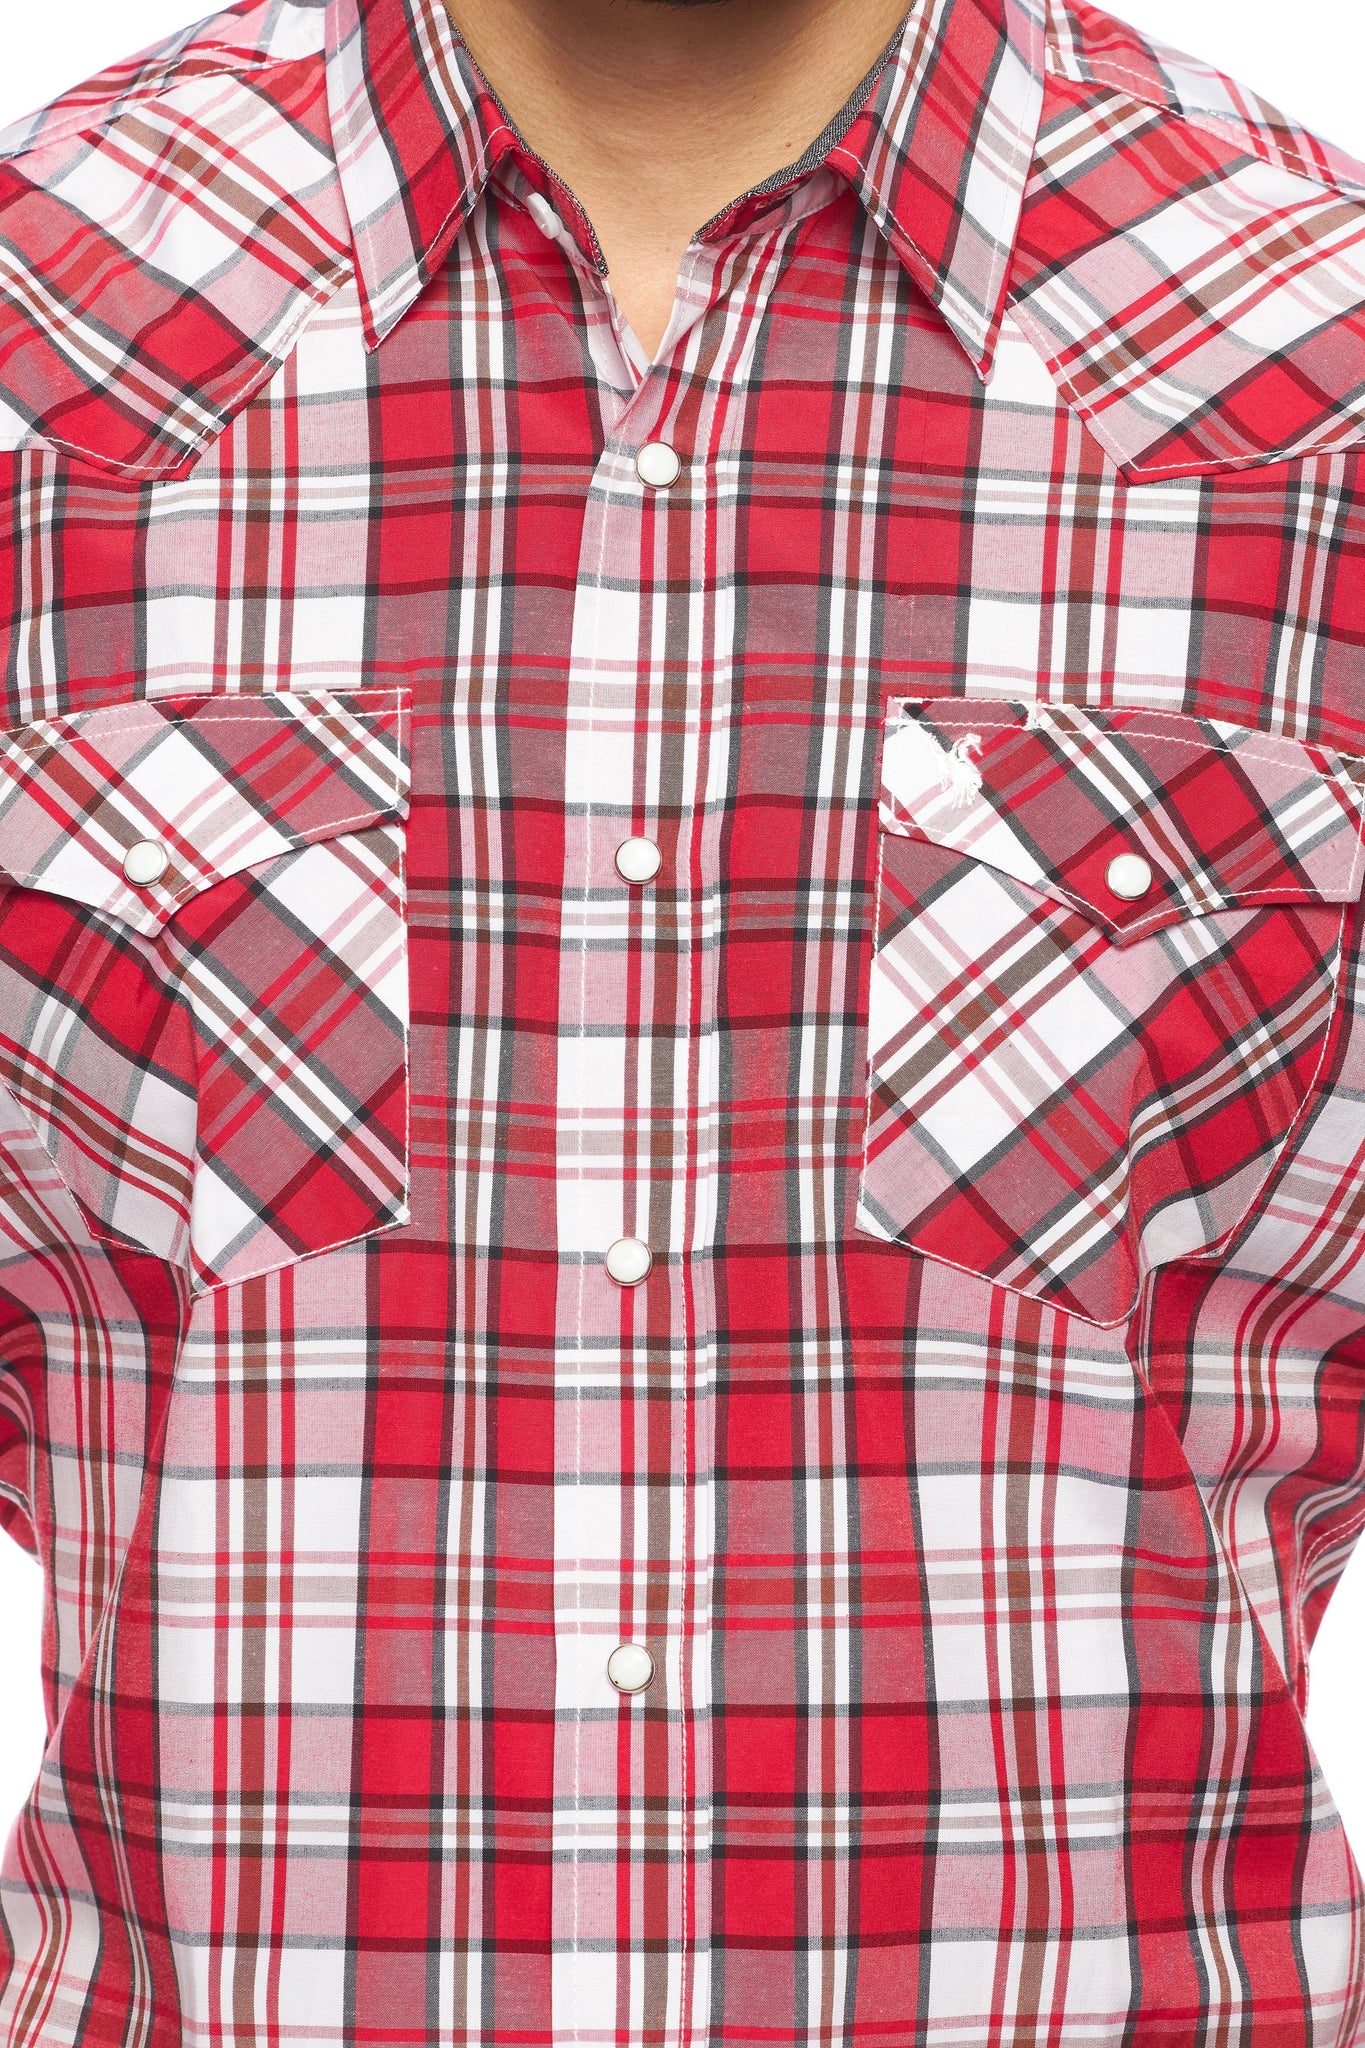 Men's Western Short Sleeve Pearl Snaps Plaid Shirt -PS400S-411